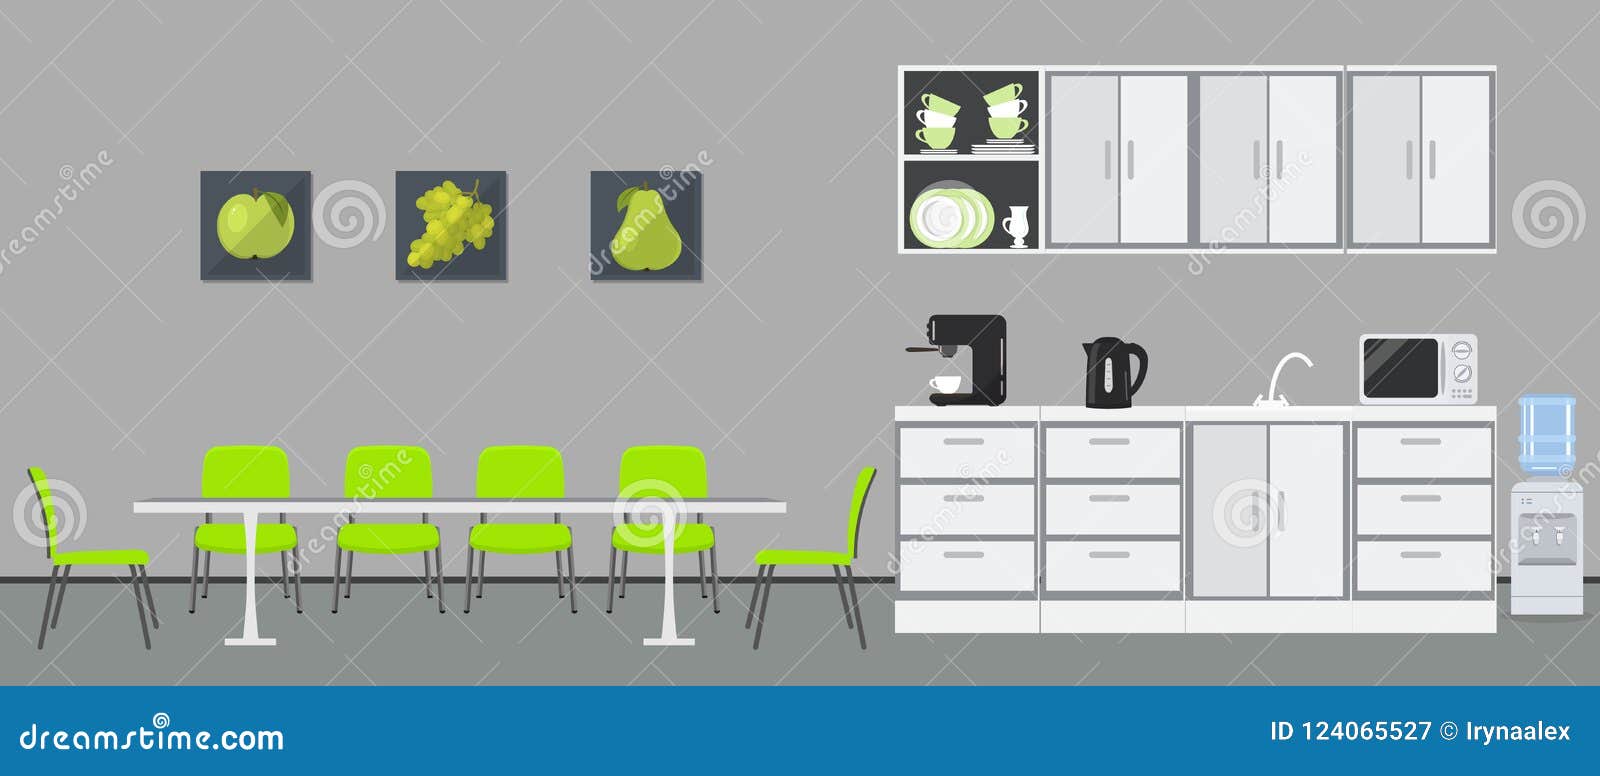 Office Kitchen Dining Room In Office Stock Vector Illustration